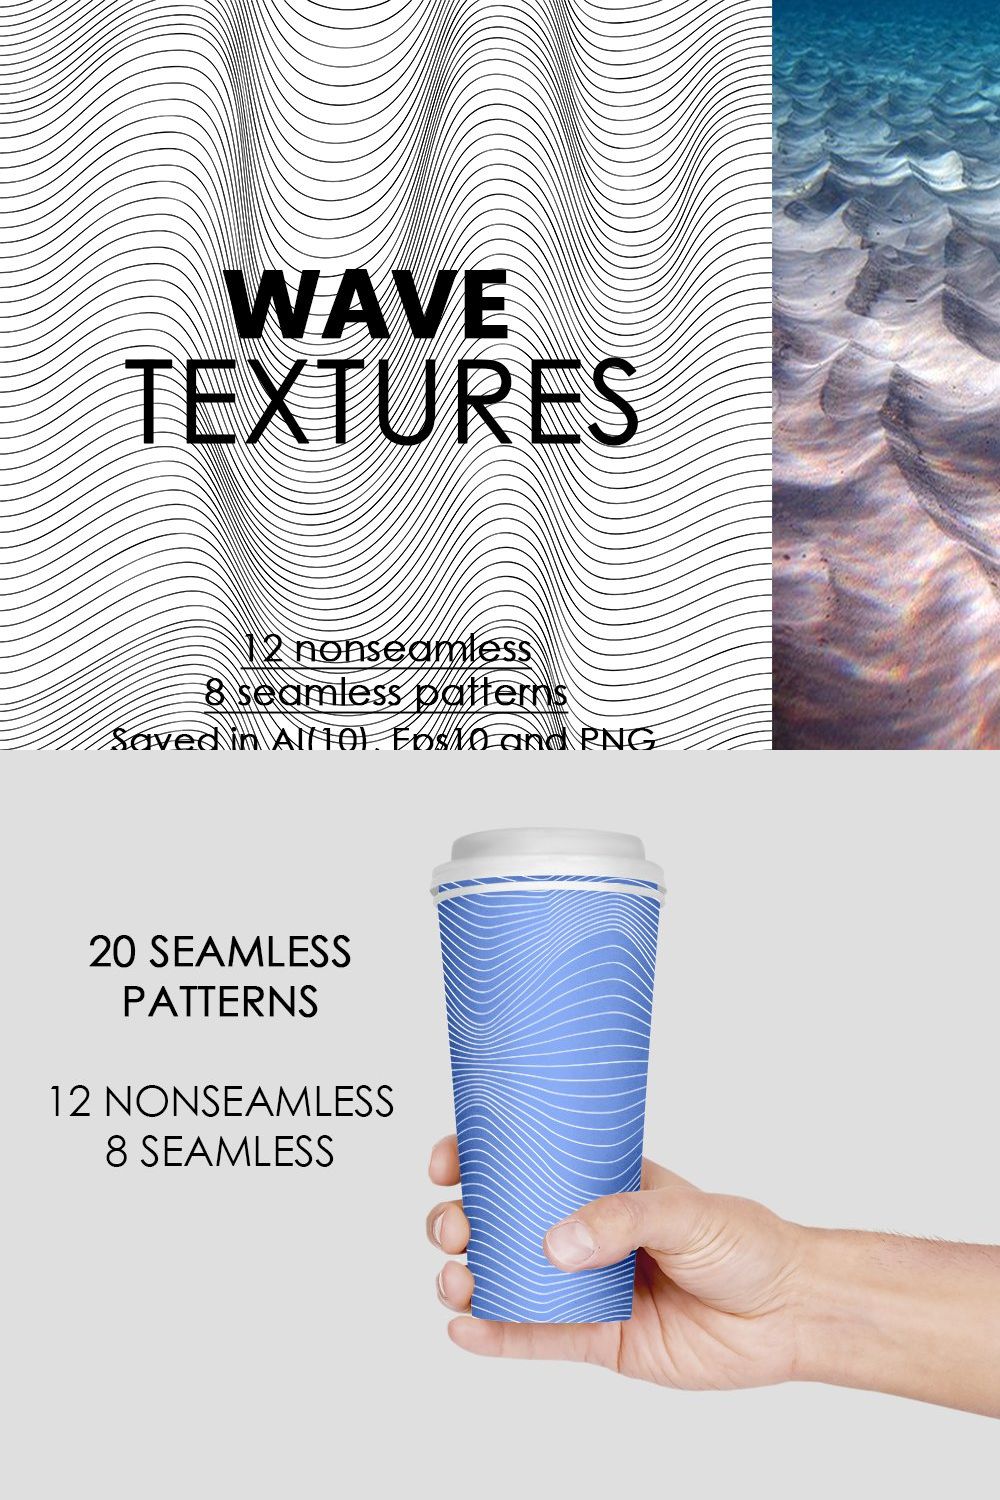 20 Wave textures pinterest preview image.